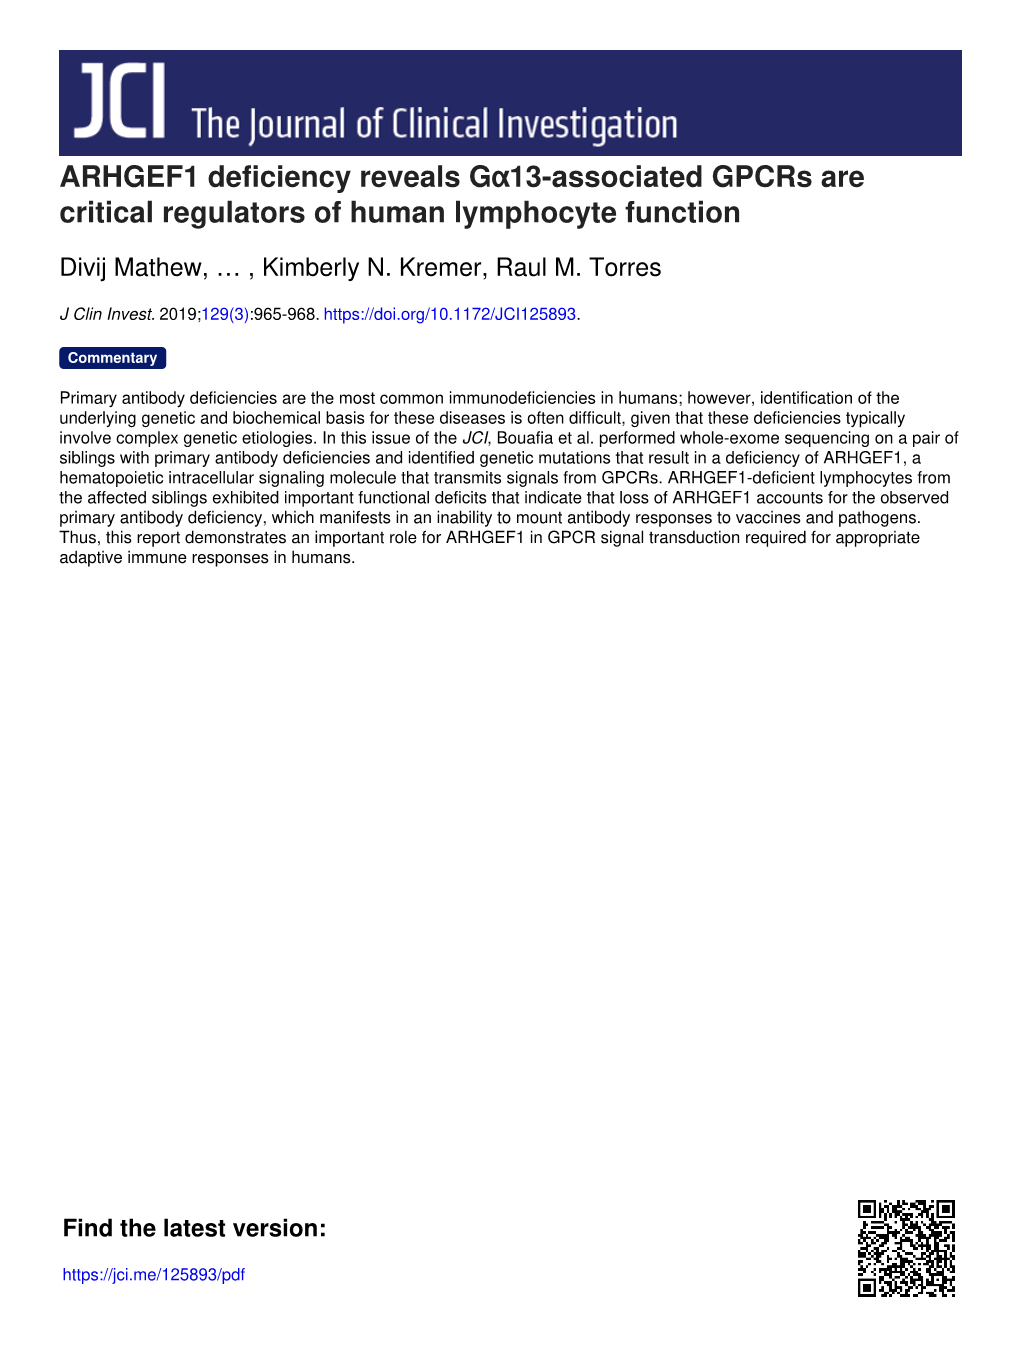 ARHGEF1 Deficiency Reveals Gα13-Associated Gpcrs Are Critical Regulators of Human Lymphocyte Function